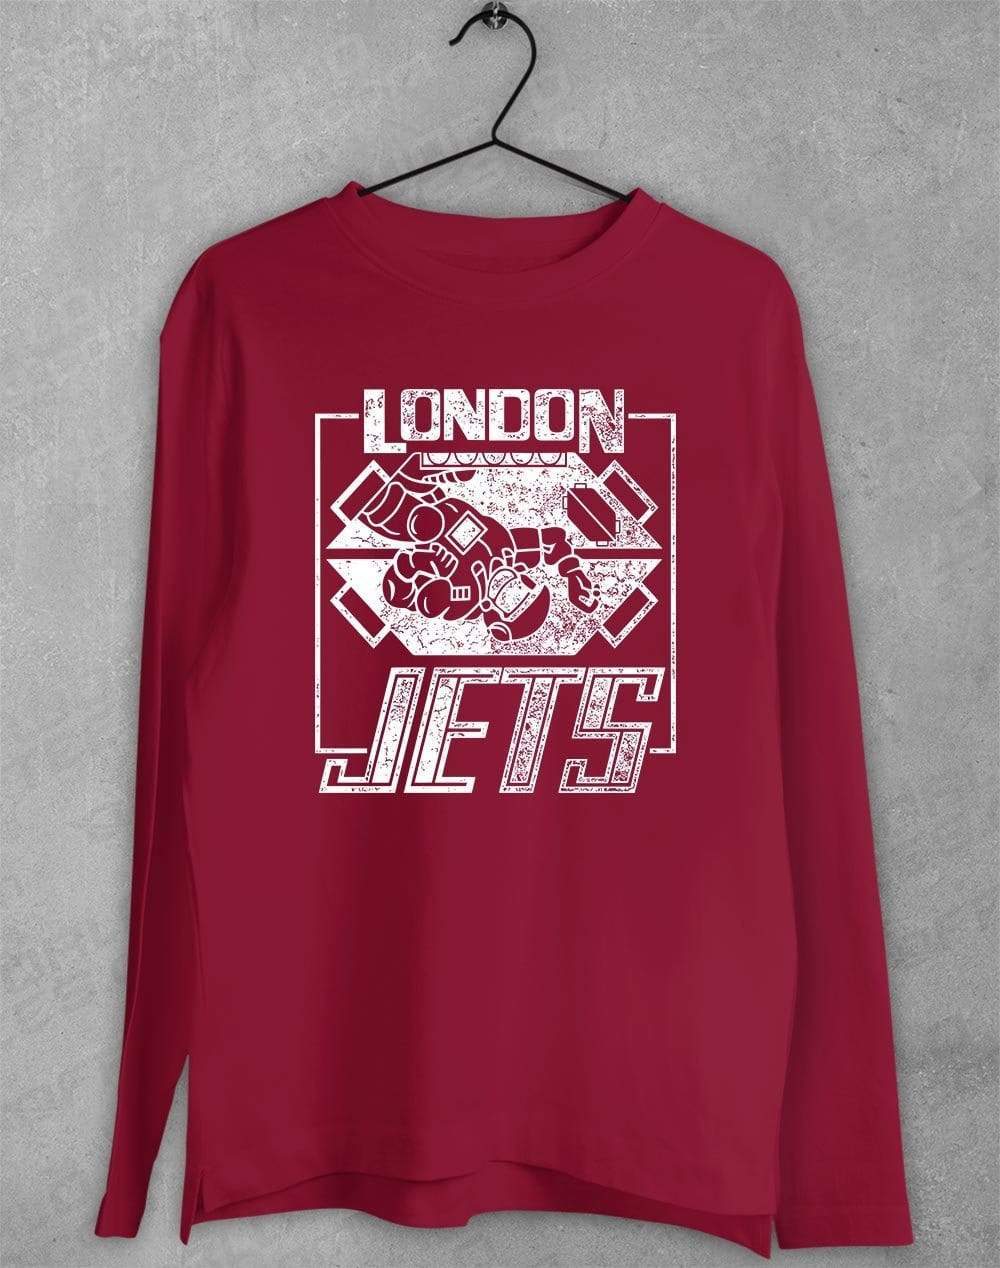 London Jets Long Sleeve T-Shirt S / Cardinal  - Off World Tees